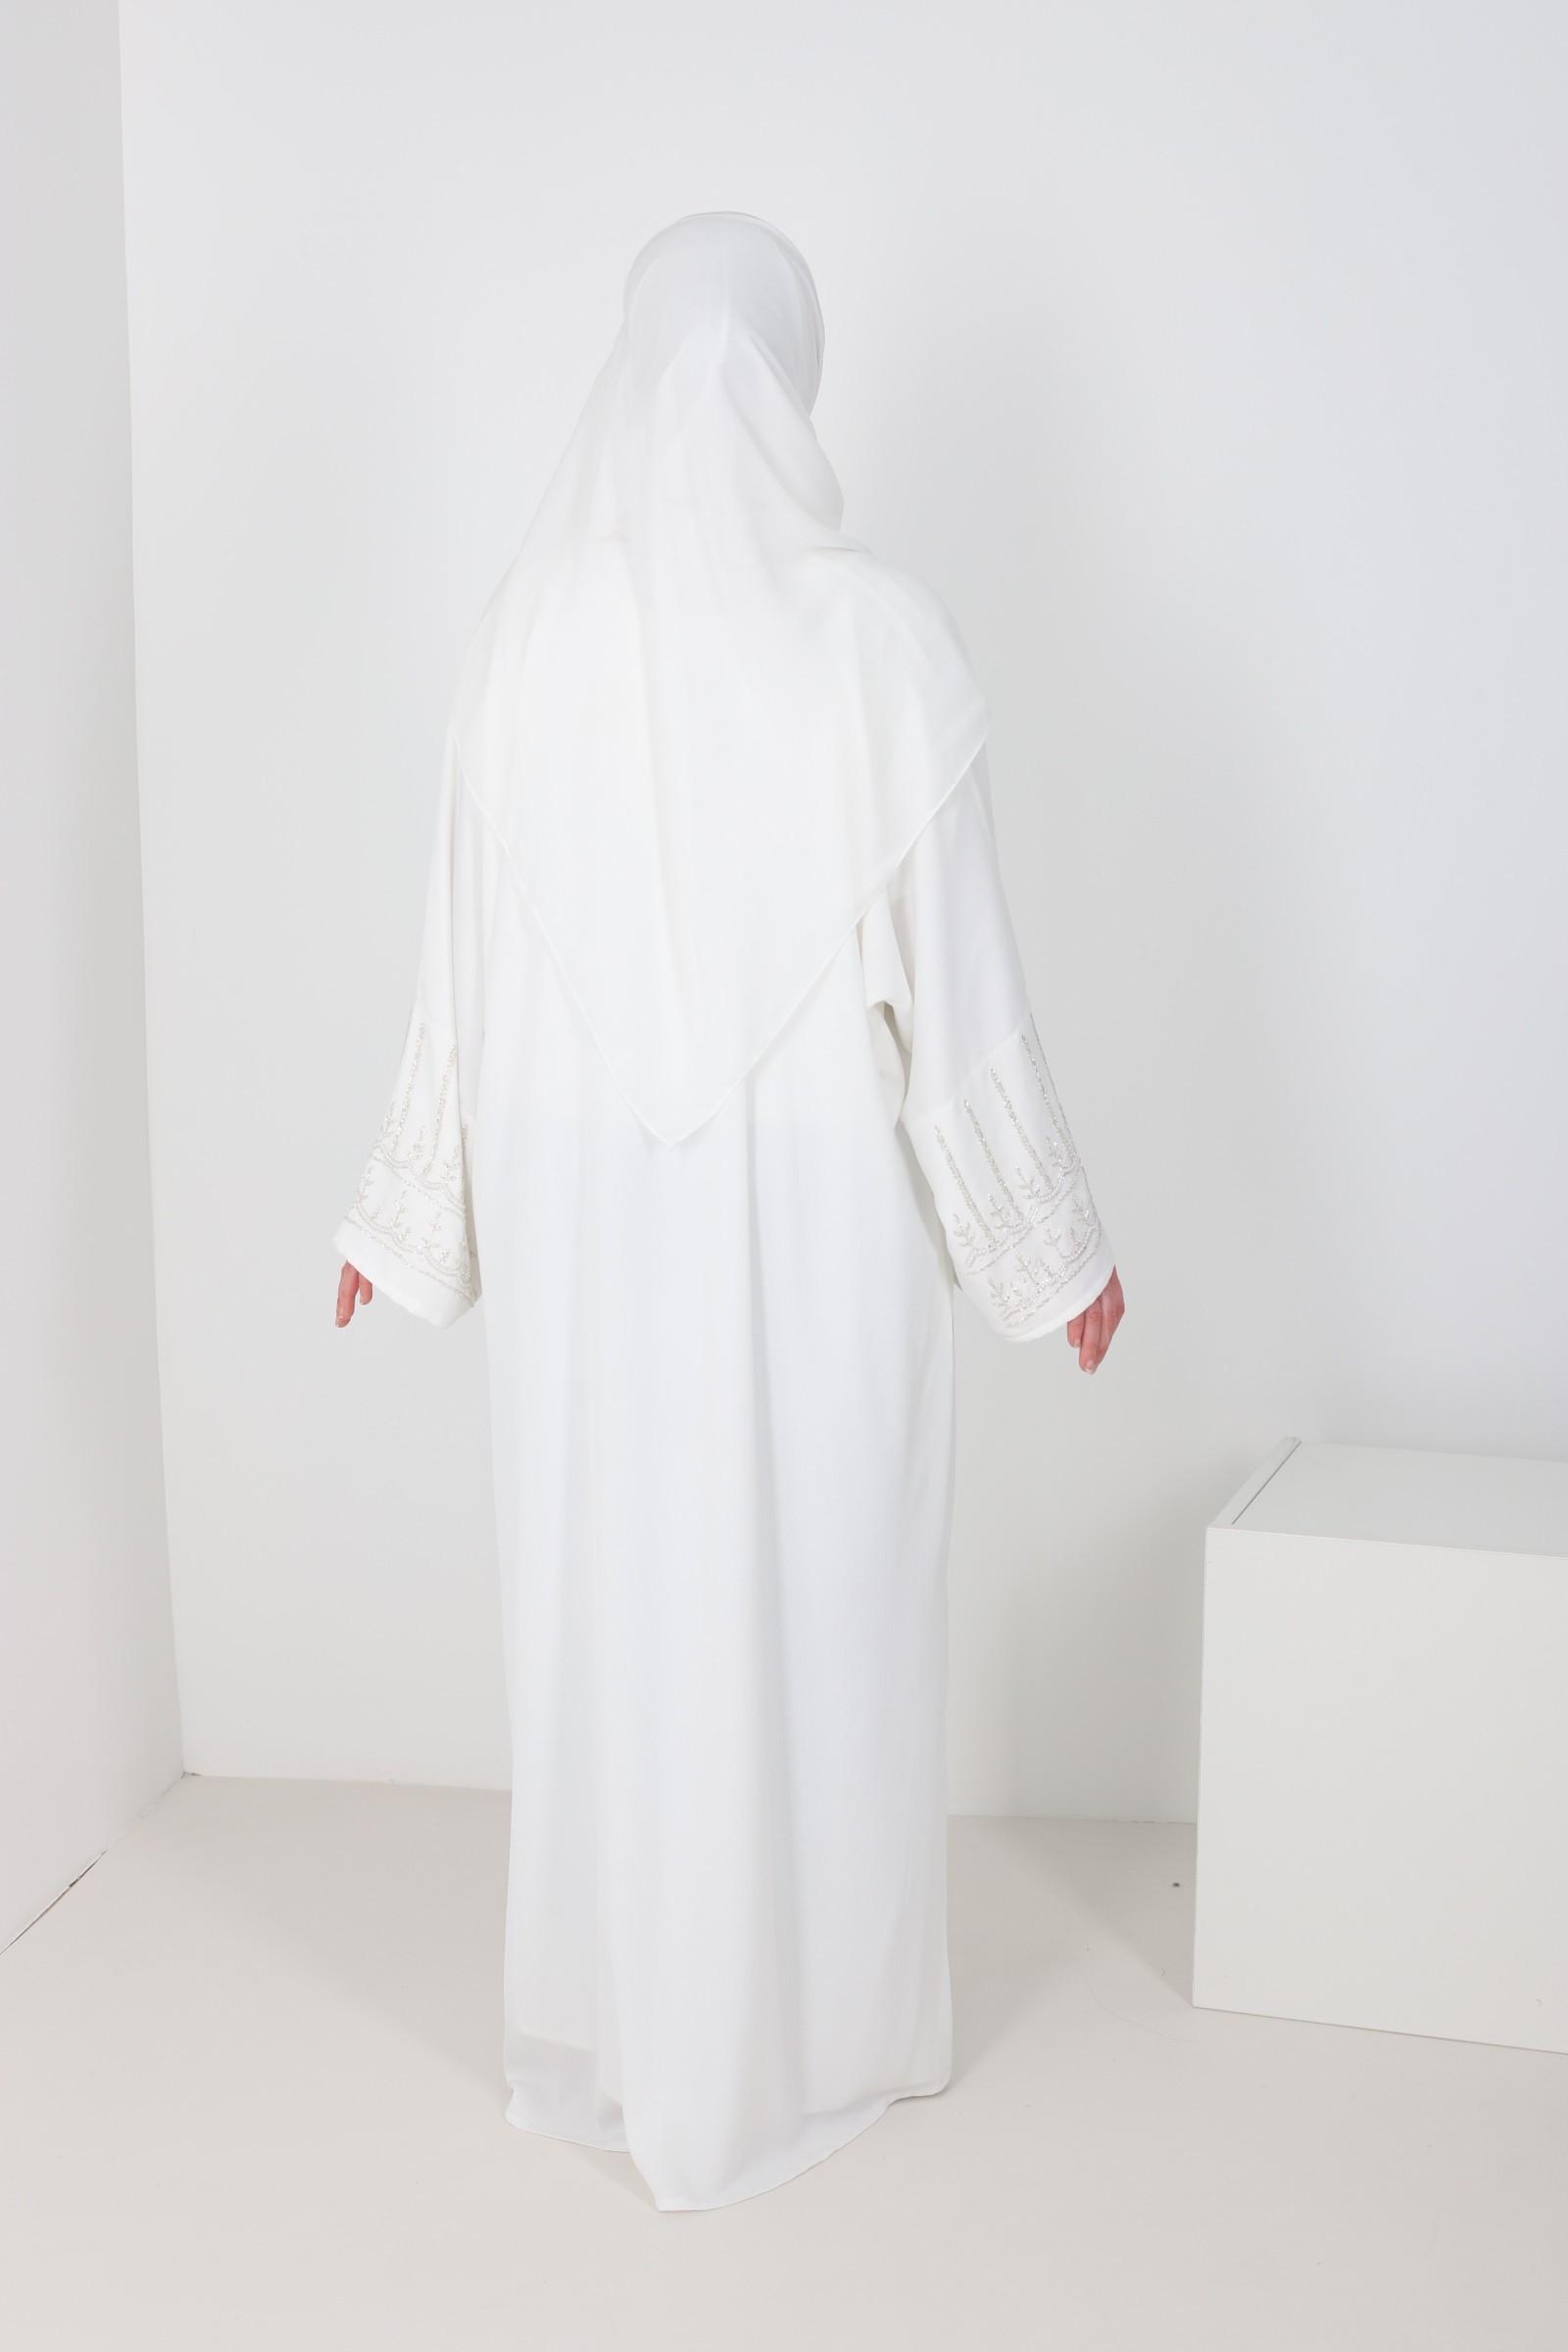 Abaya dubai haut de gamme tissu nidah femme musulmane